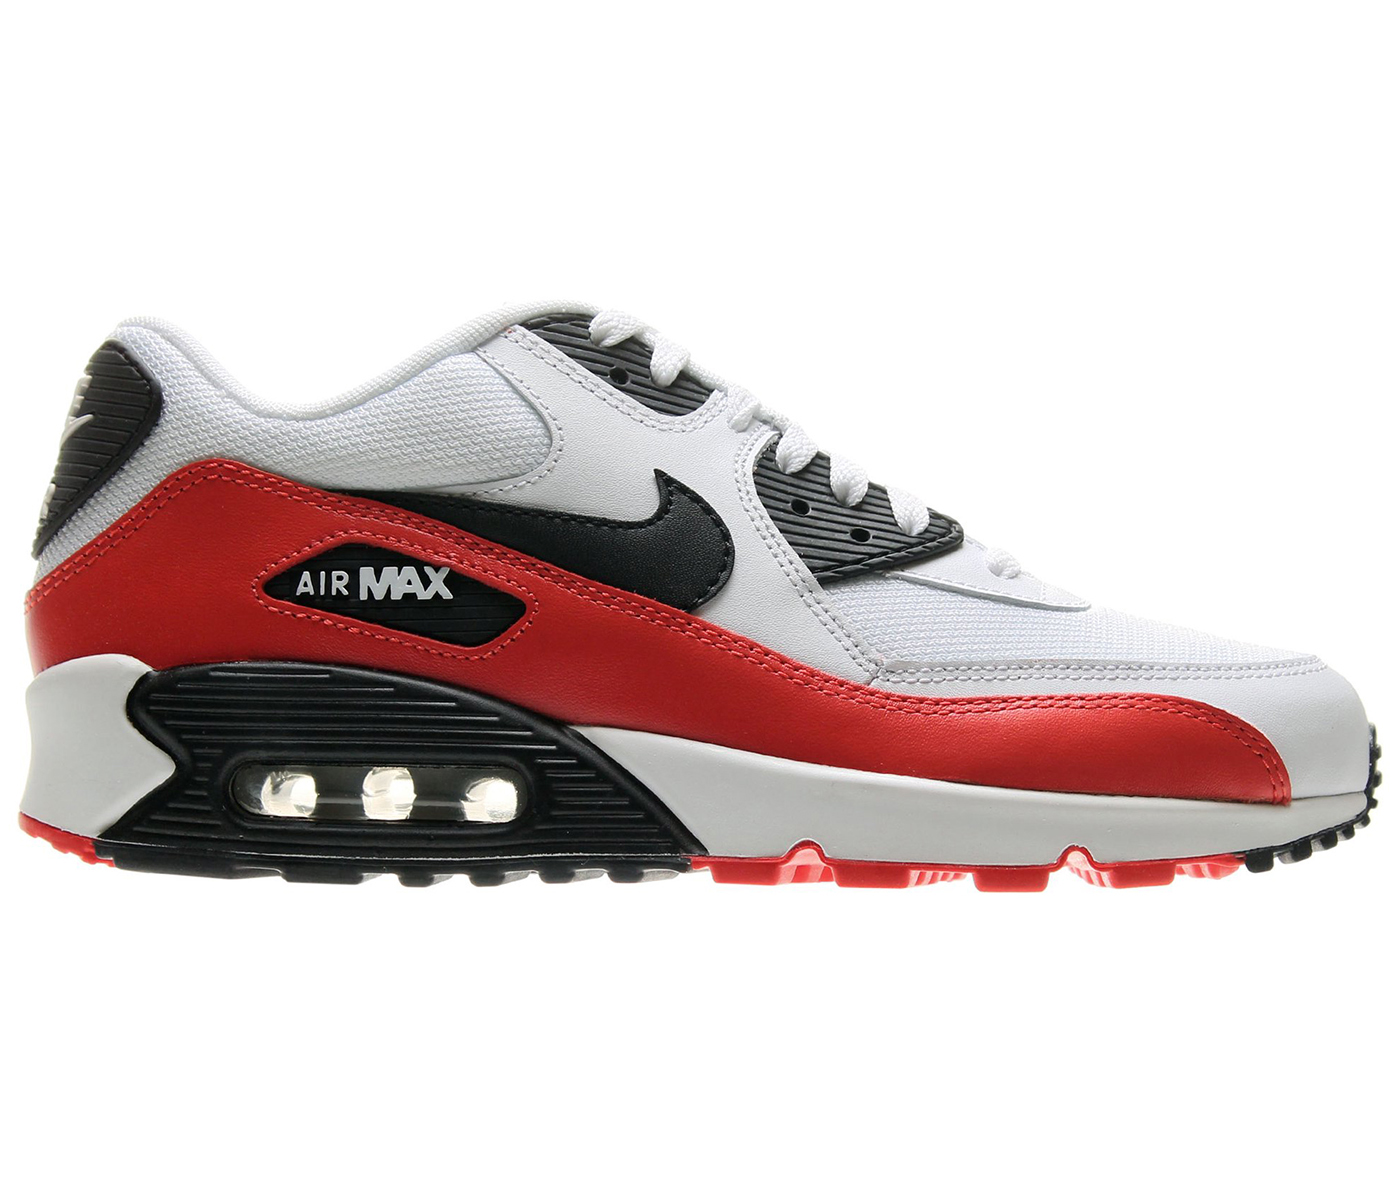 Nike Air Max 90 Essential White Black Light Crimson メンズ - 537384-116 - JP